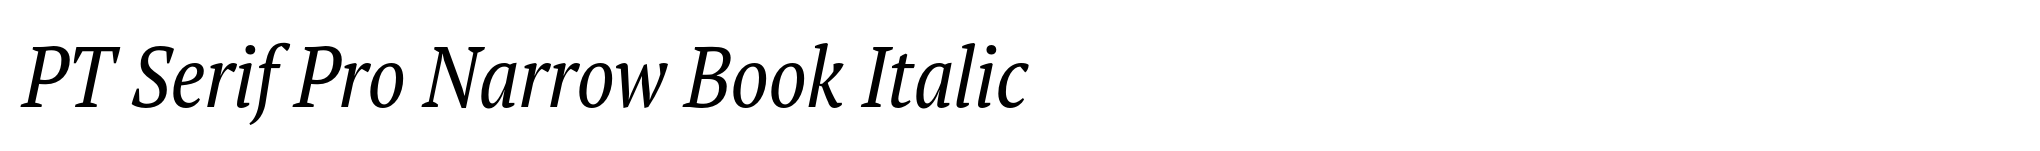 PT Serif Pro Narrow Book Italic image